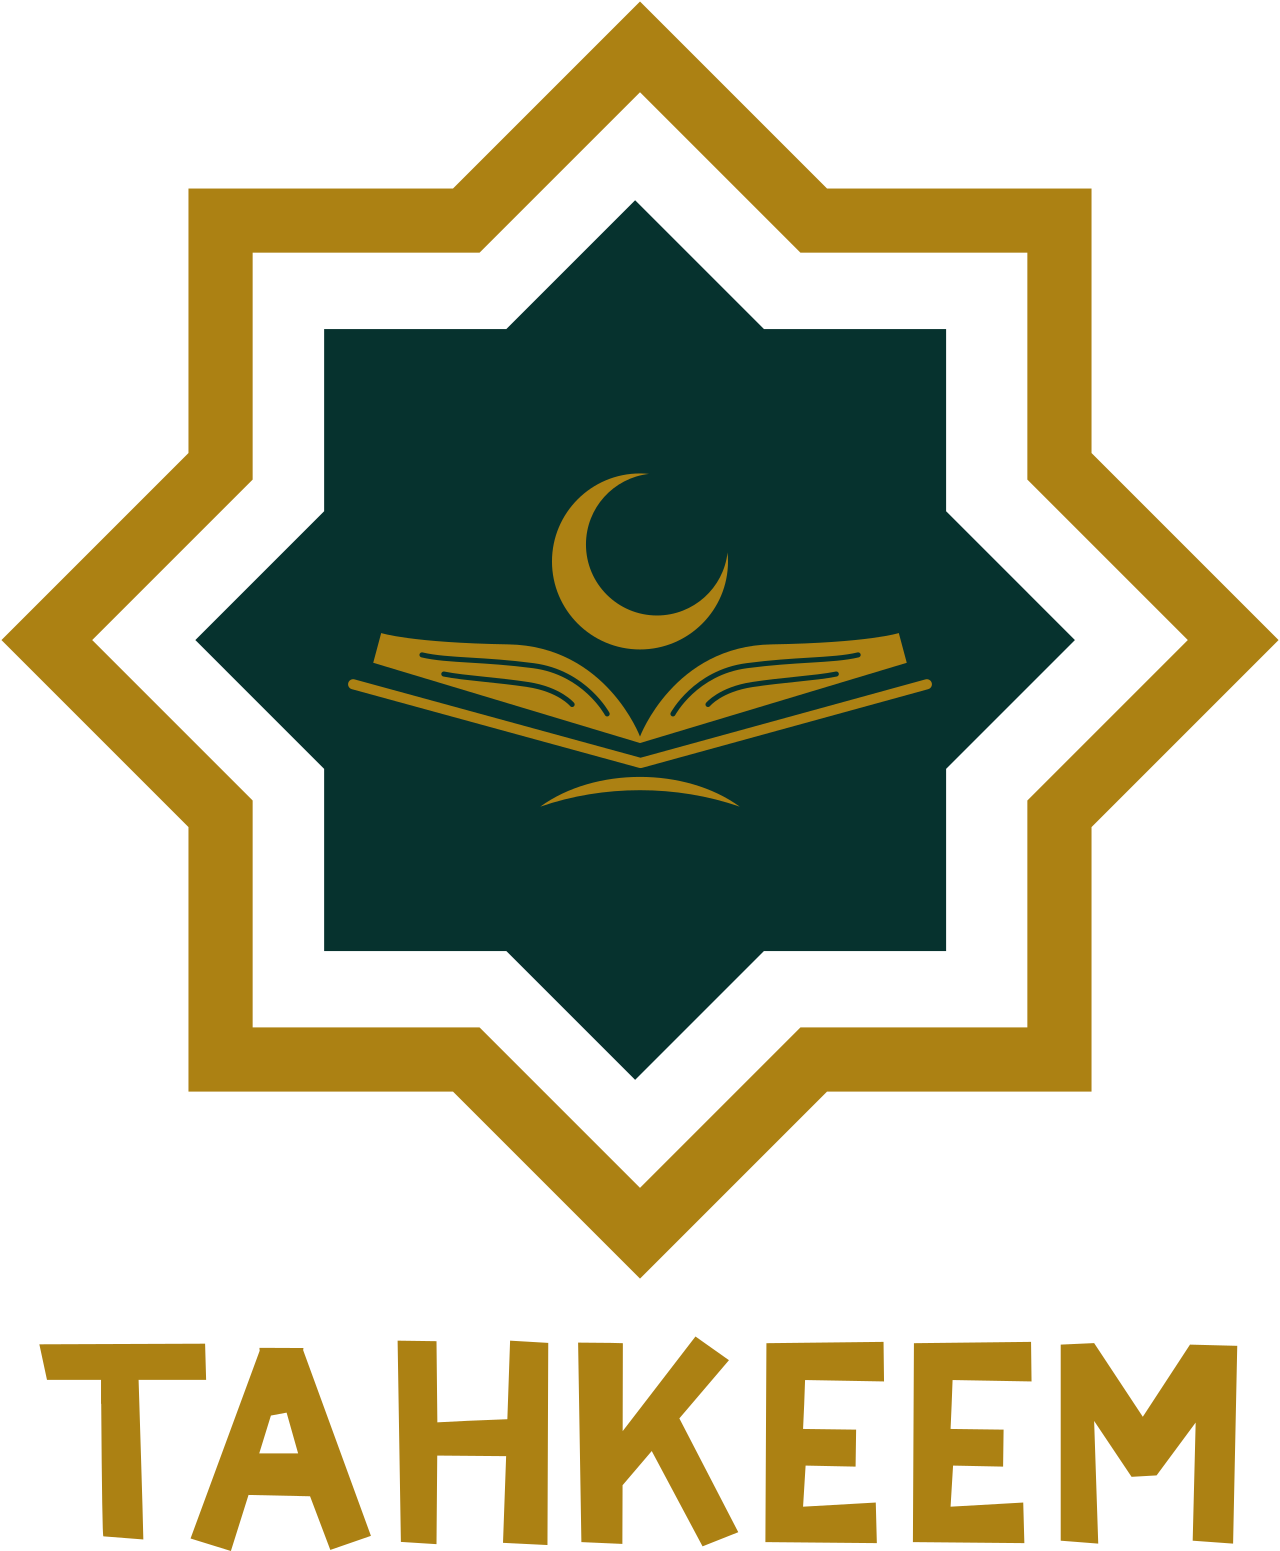 TAHKEEM's web page